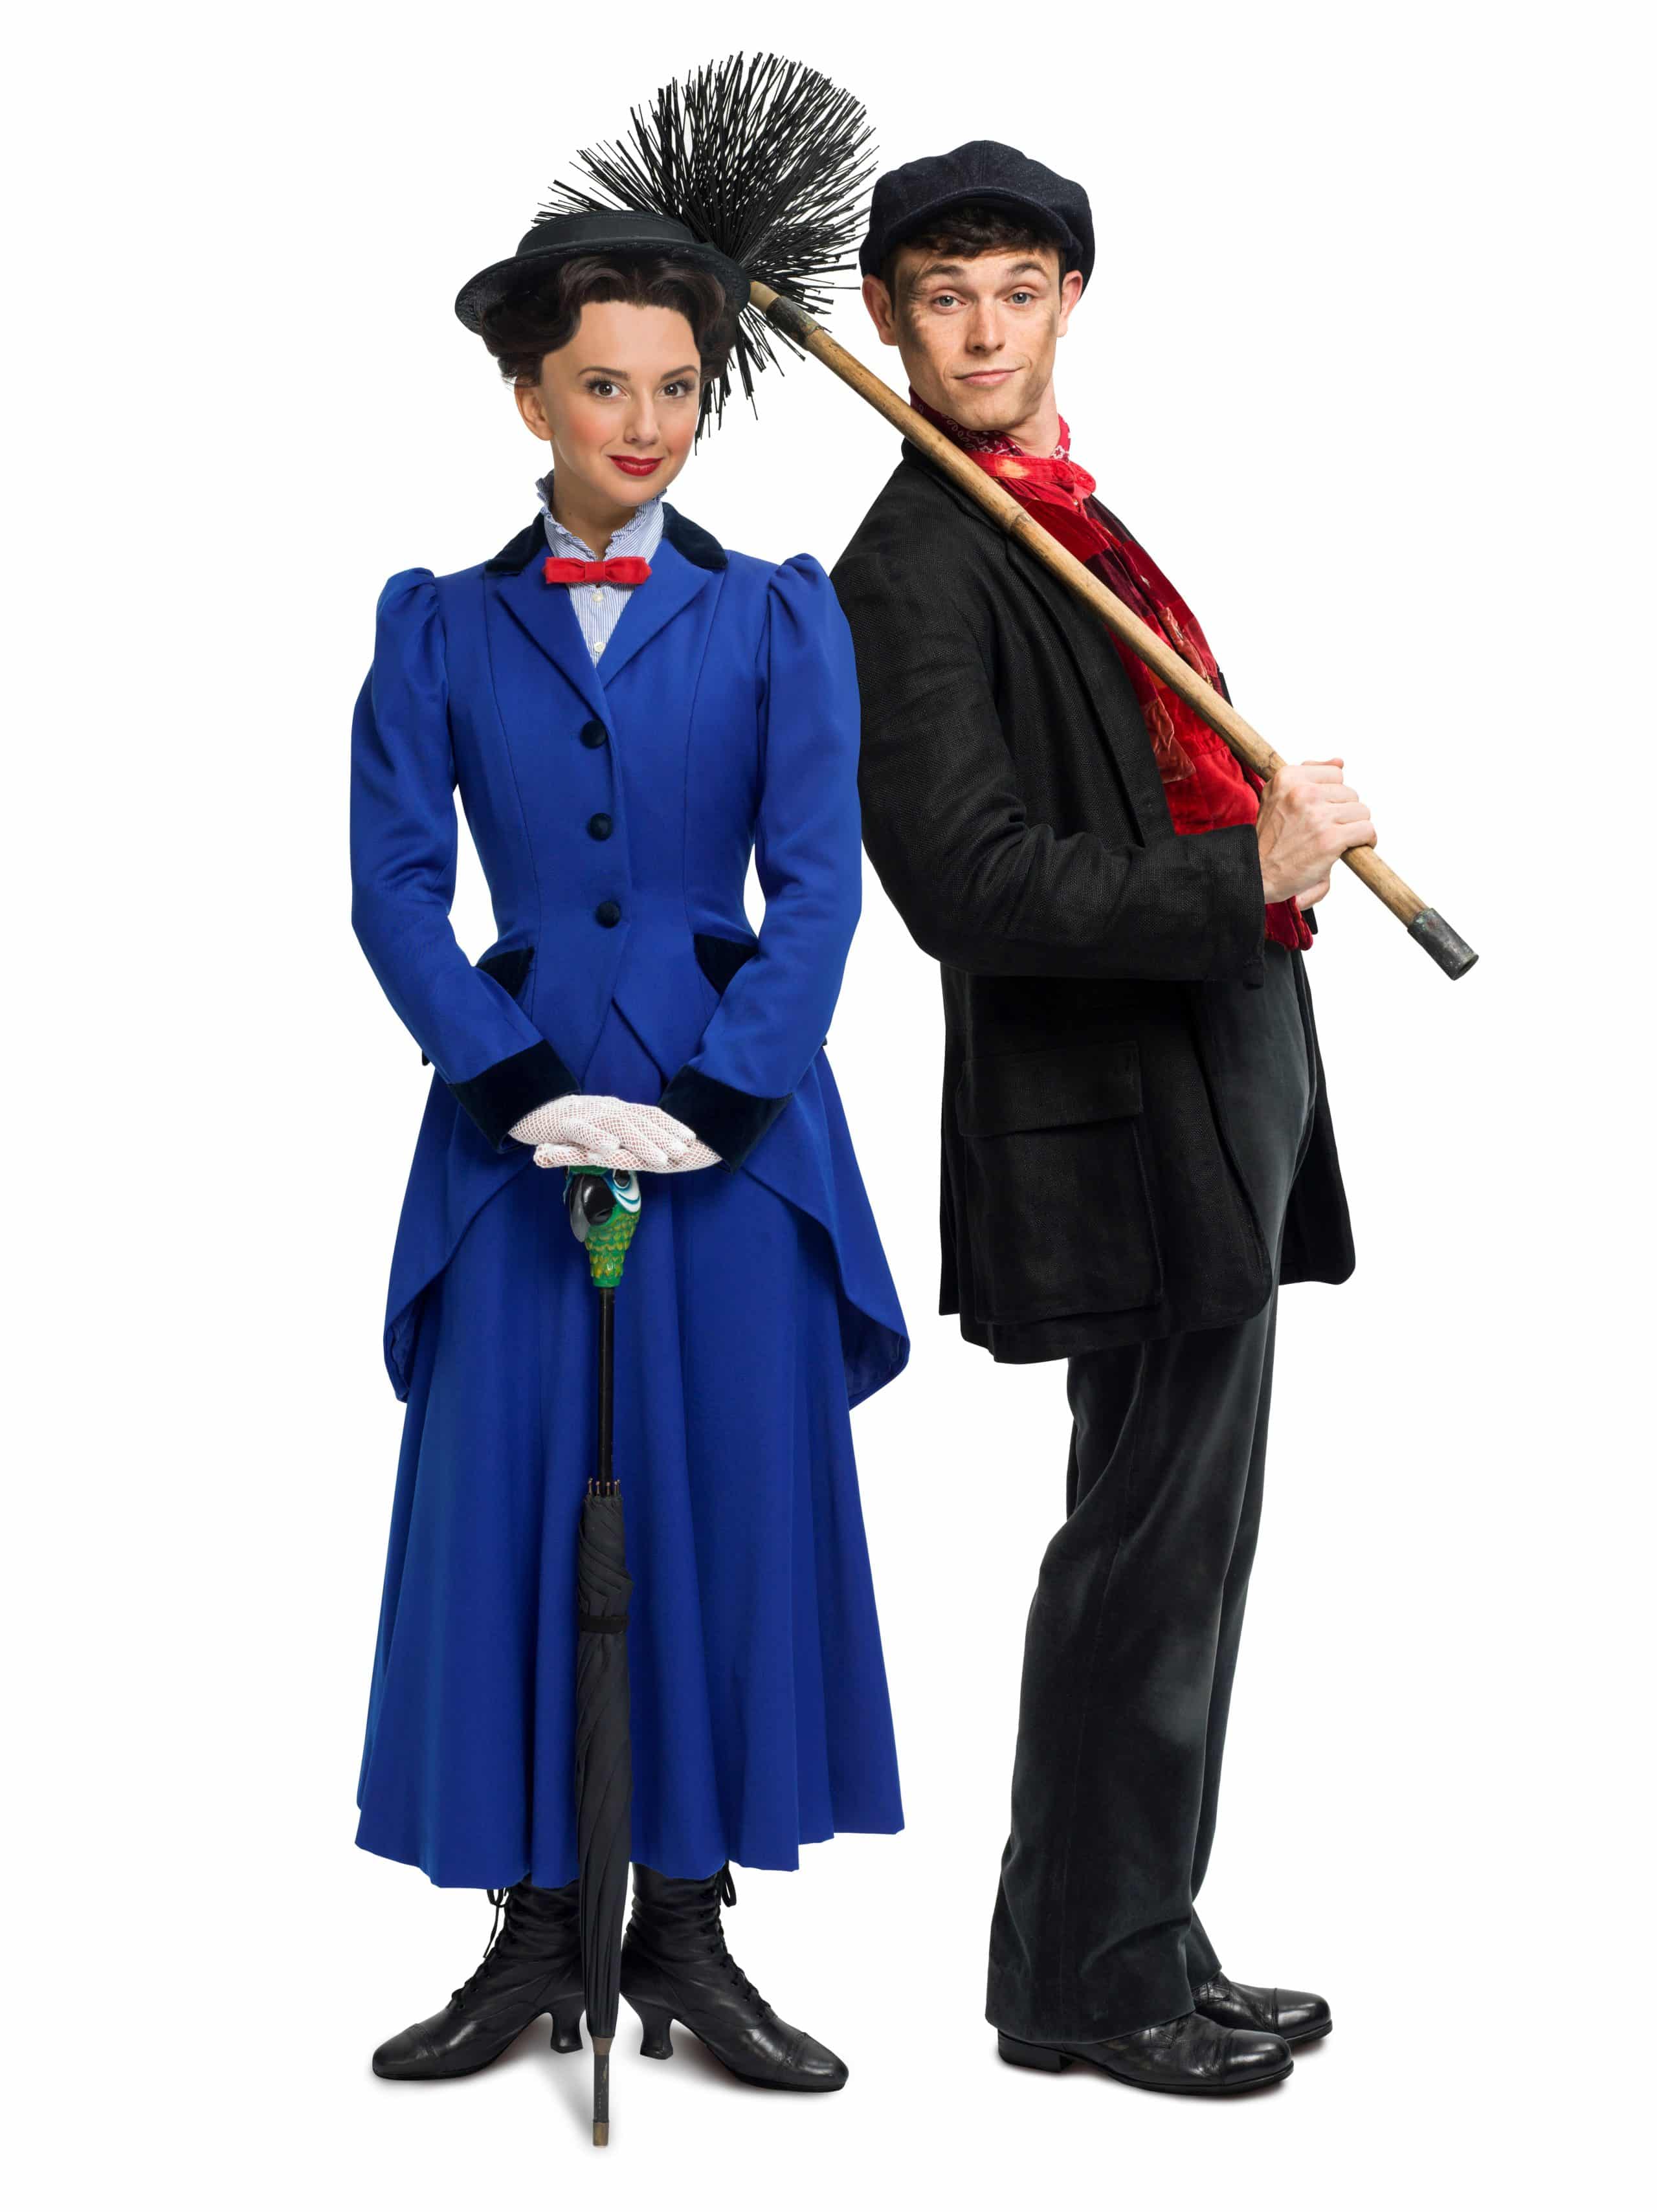 Zizi Strallen as Mary Poppins and Charlie Stemp as Bert. Photo credit Seamus Ryan